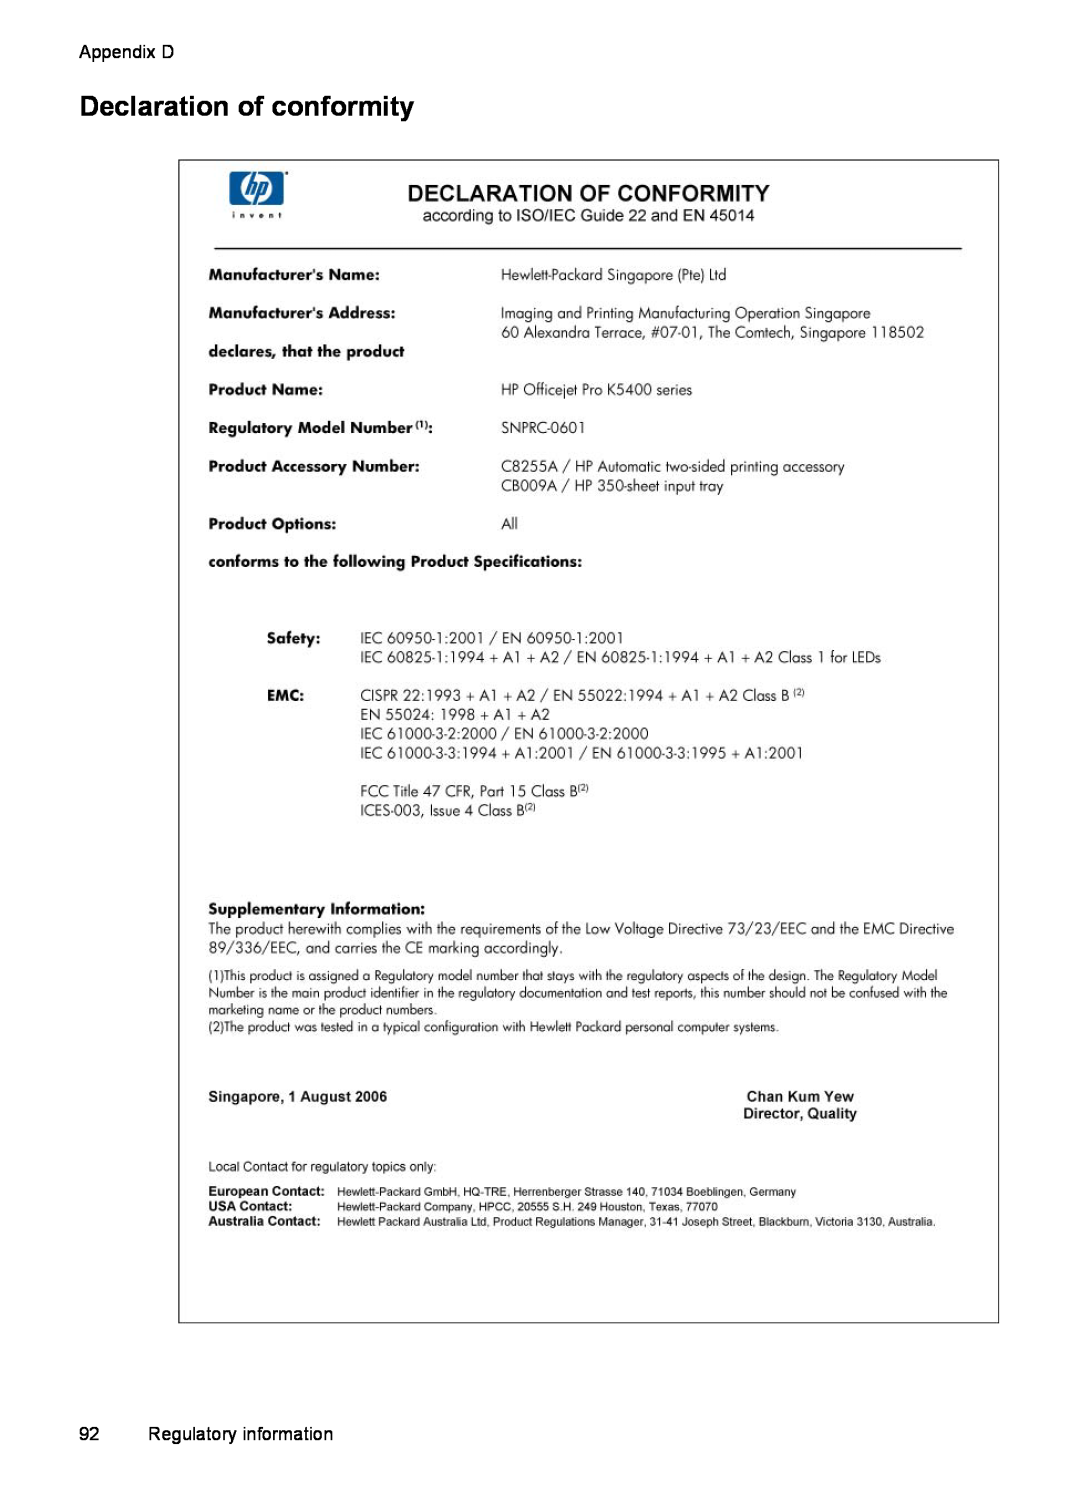 HP Pro K5400, K5300 manual Declaration of conformity, Appendix D, Regulatory information 